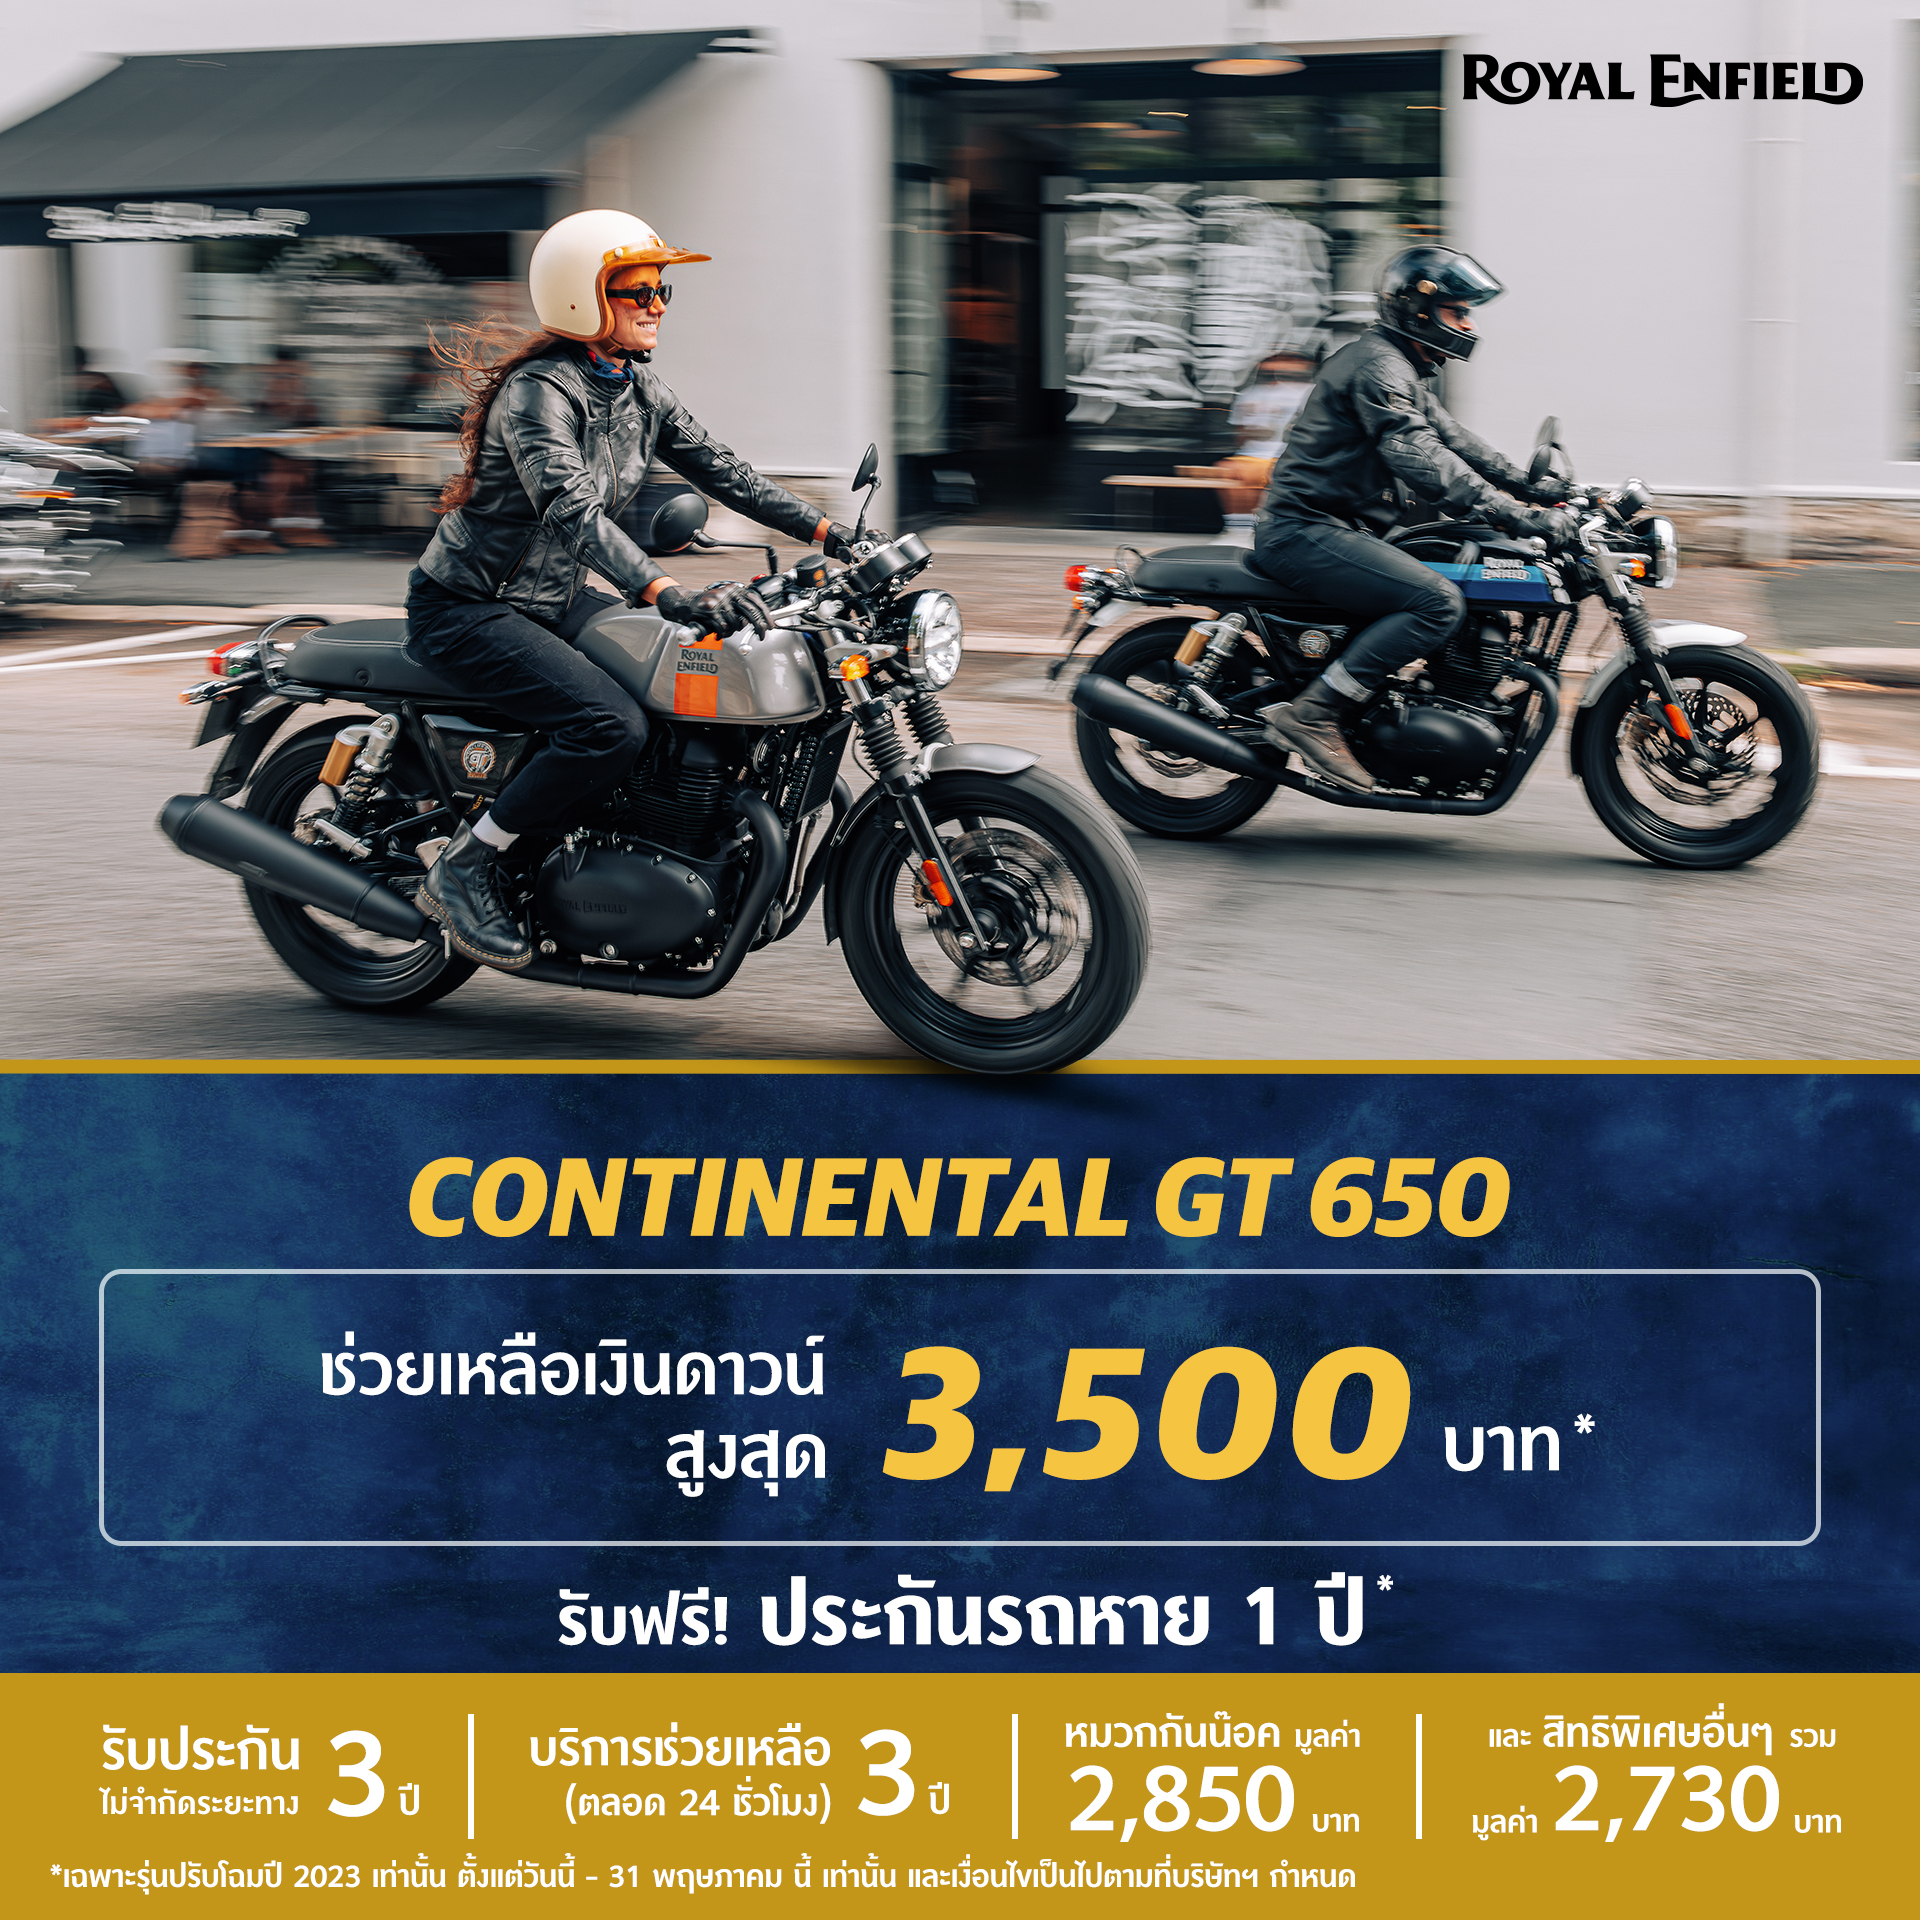 CONTINENTAL GT 650 รับ Voucher 3,500 บาท